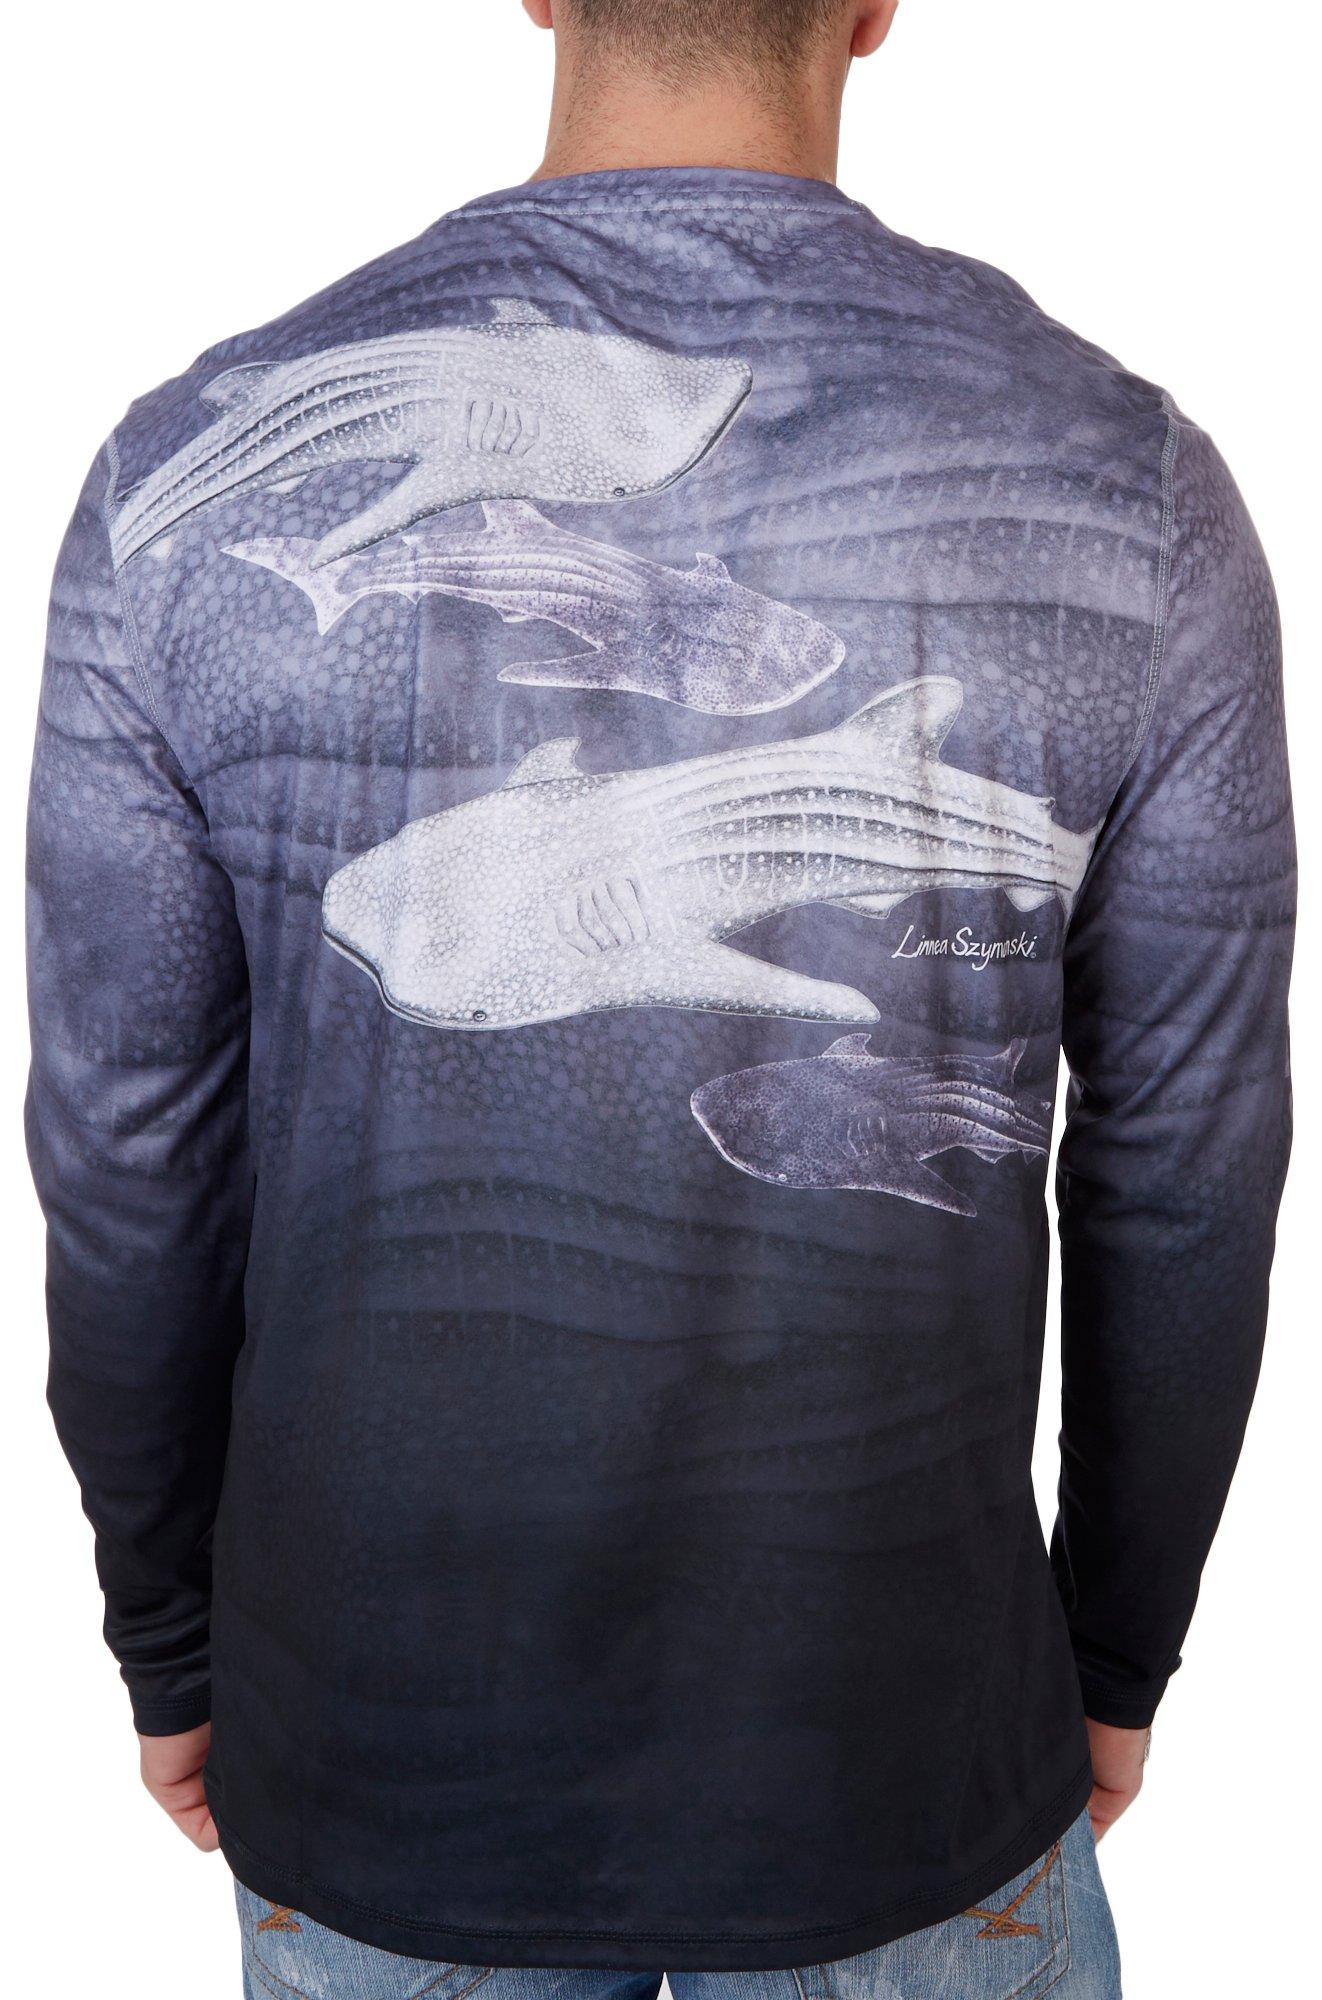 Reel Legends Mens Reel-Tec Whale Shark Long Sleeve T-Shirt